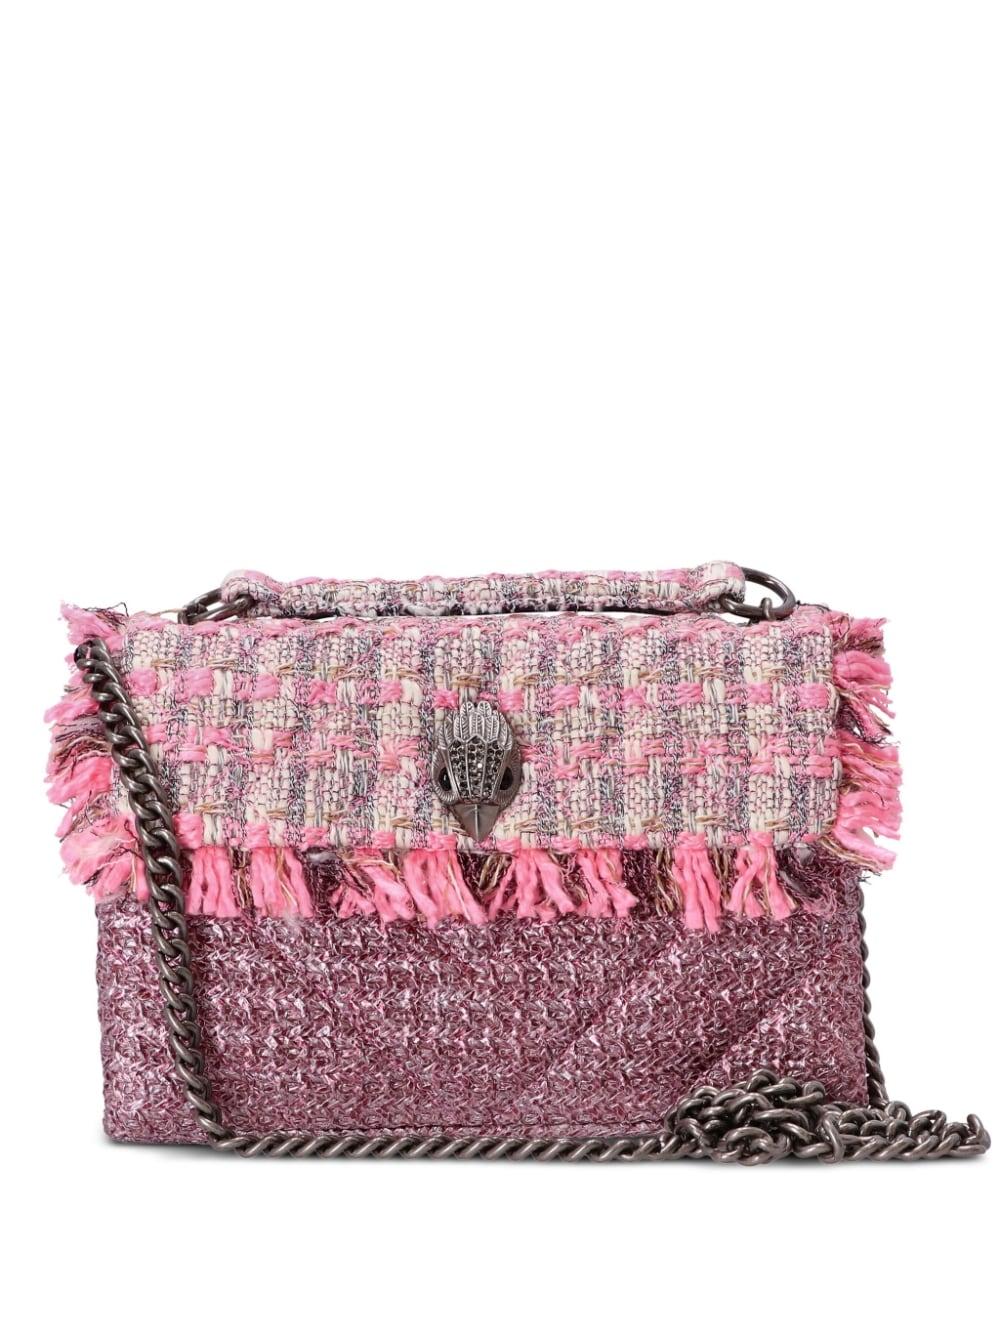 Kurt Geiger Kensington Medium Raffia Bag in Pink | Lyst